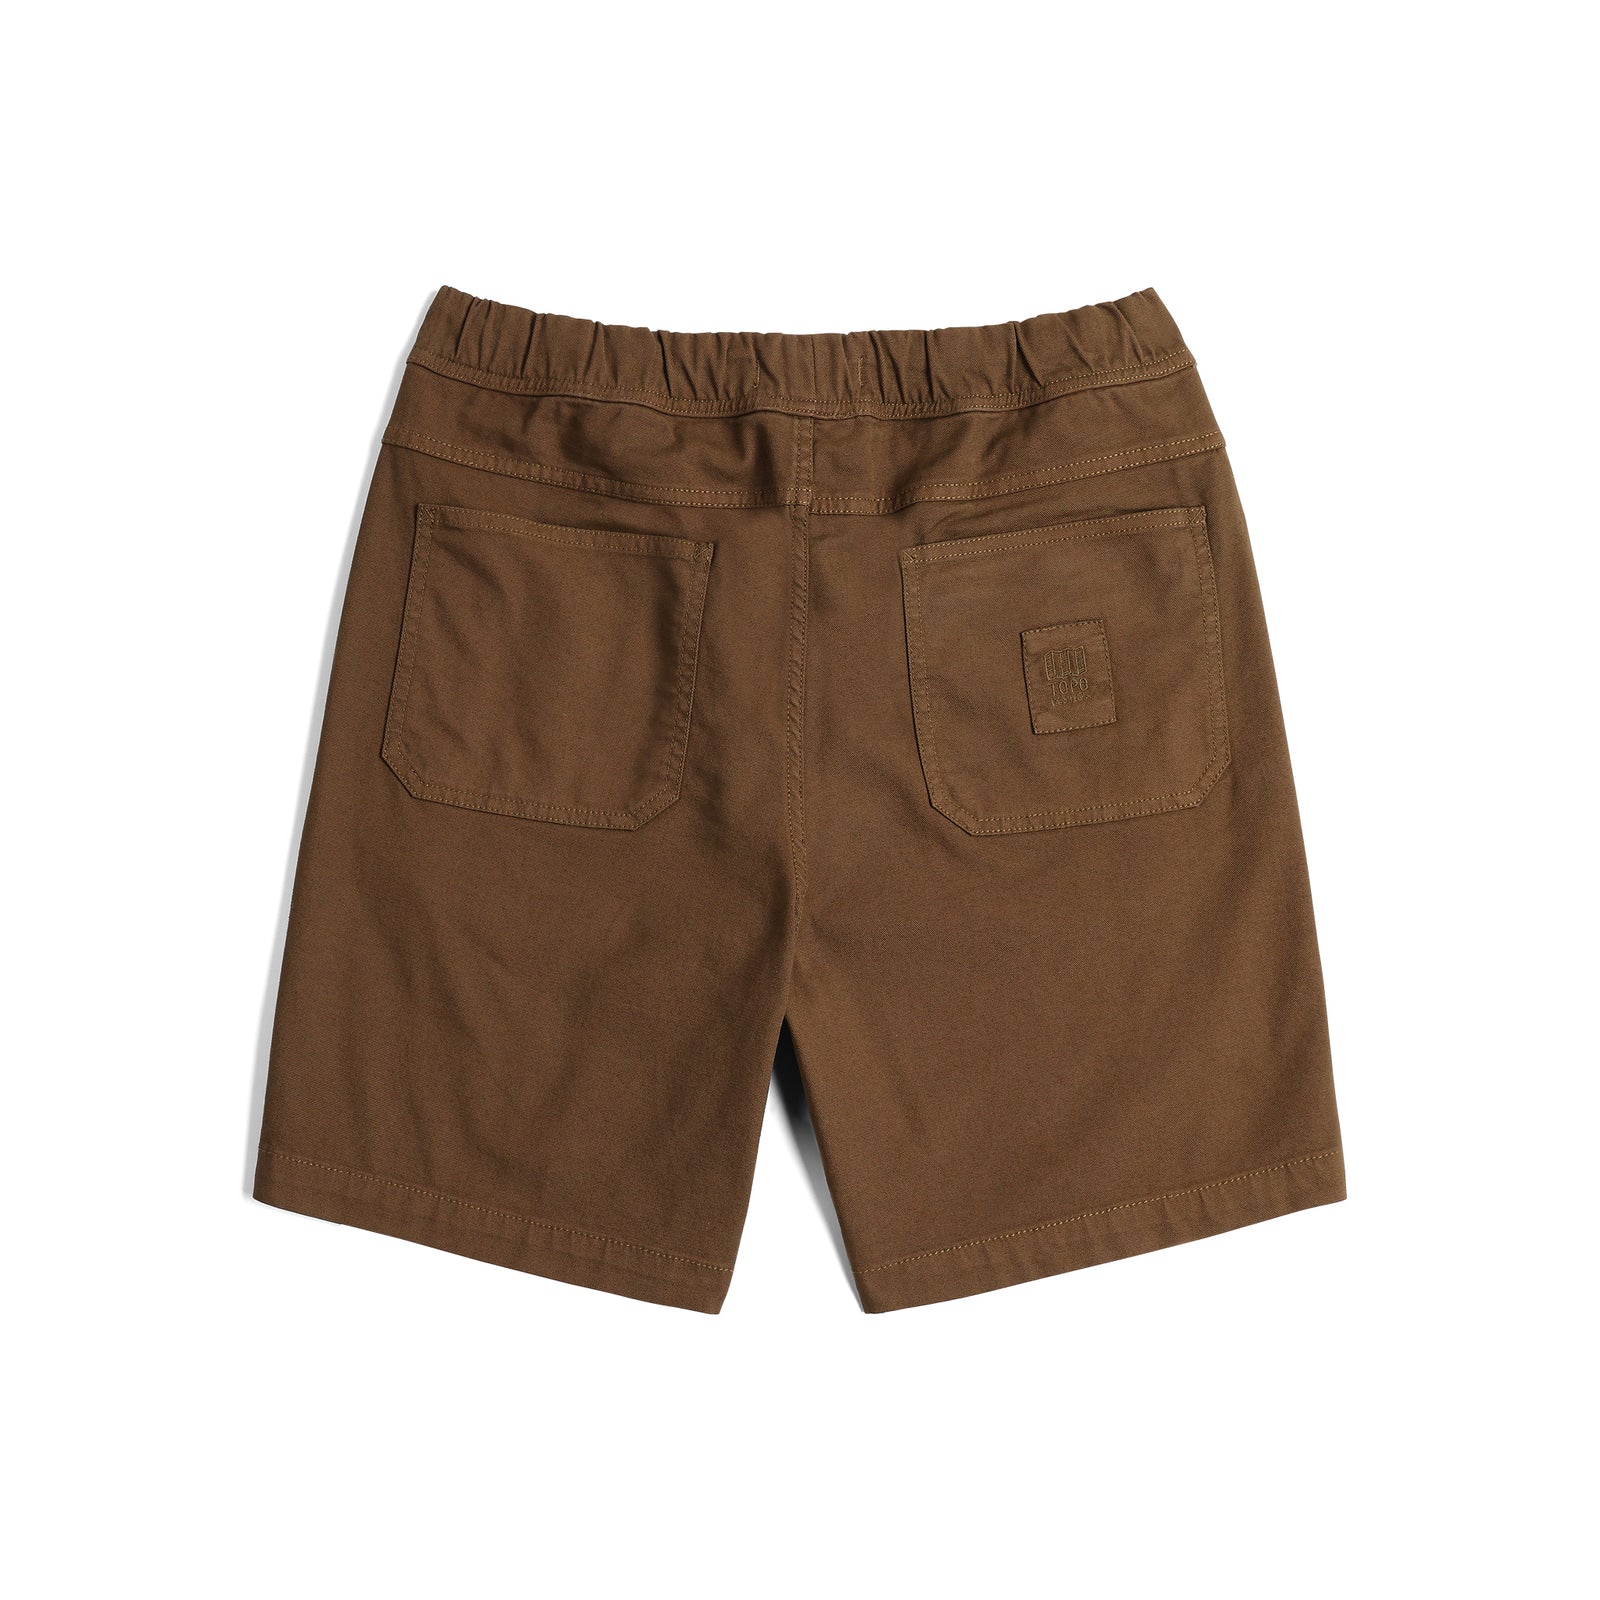 Back View of Topo Designs Dirt Shorts - Men's in "Desert Palm"